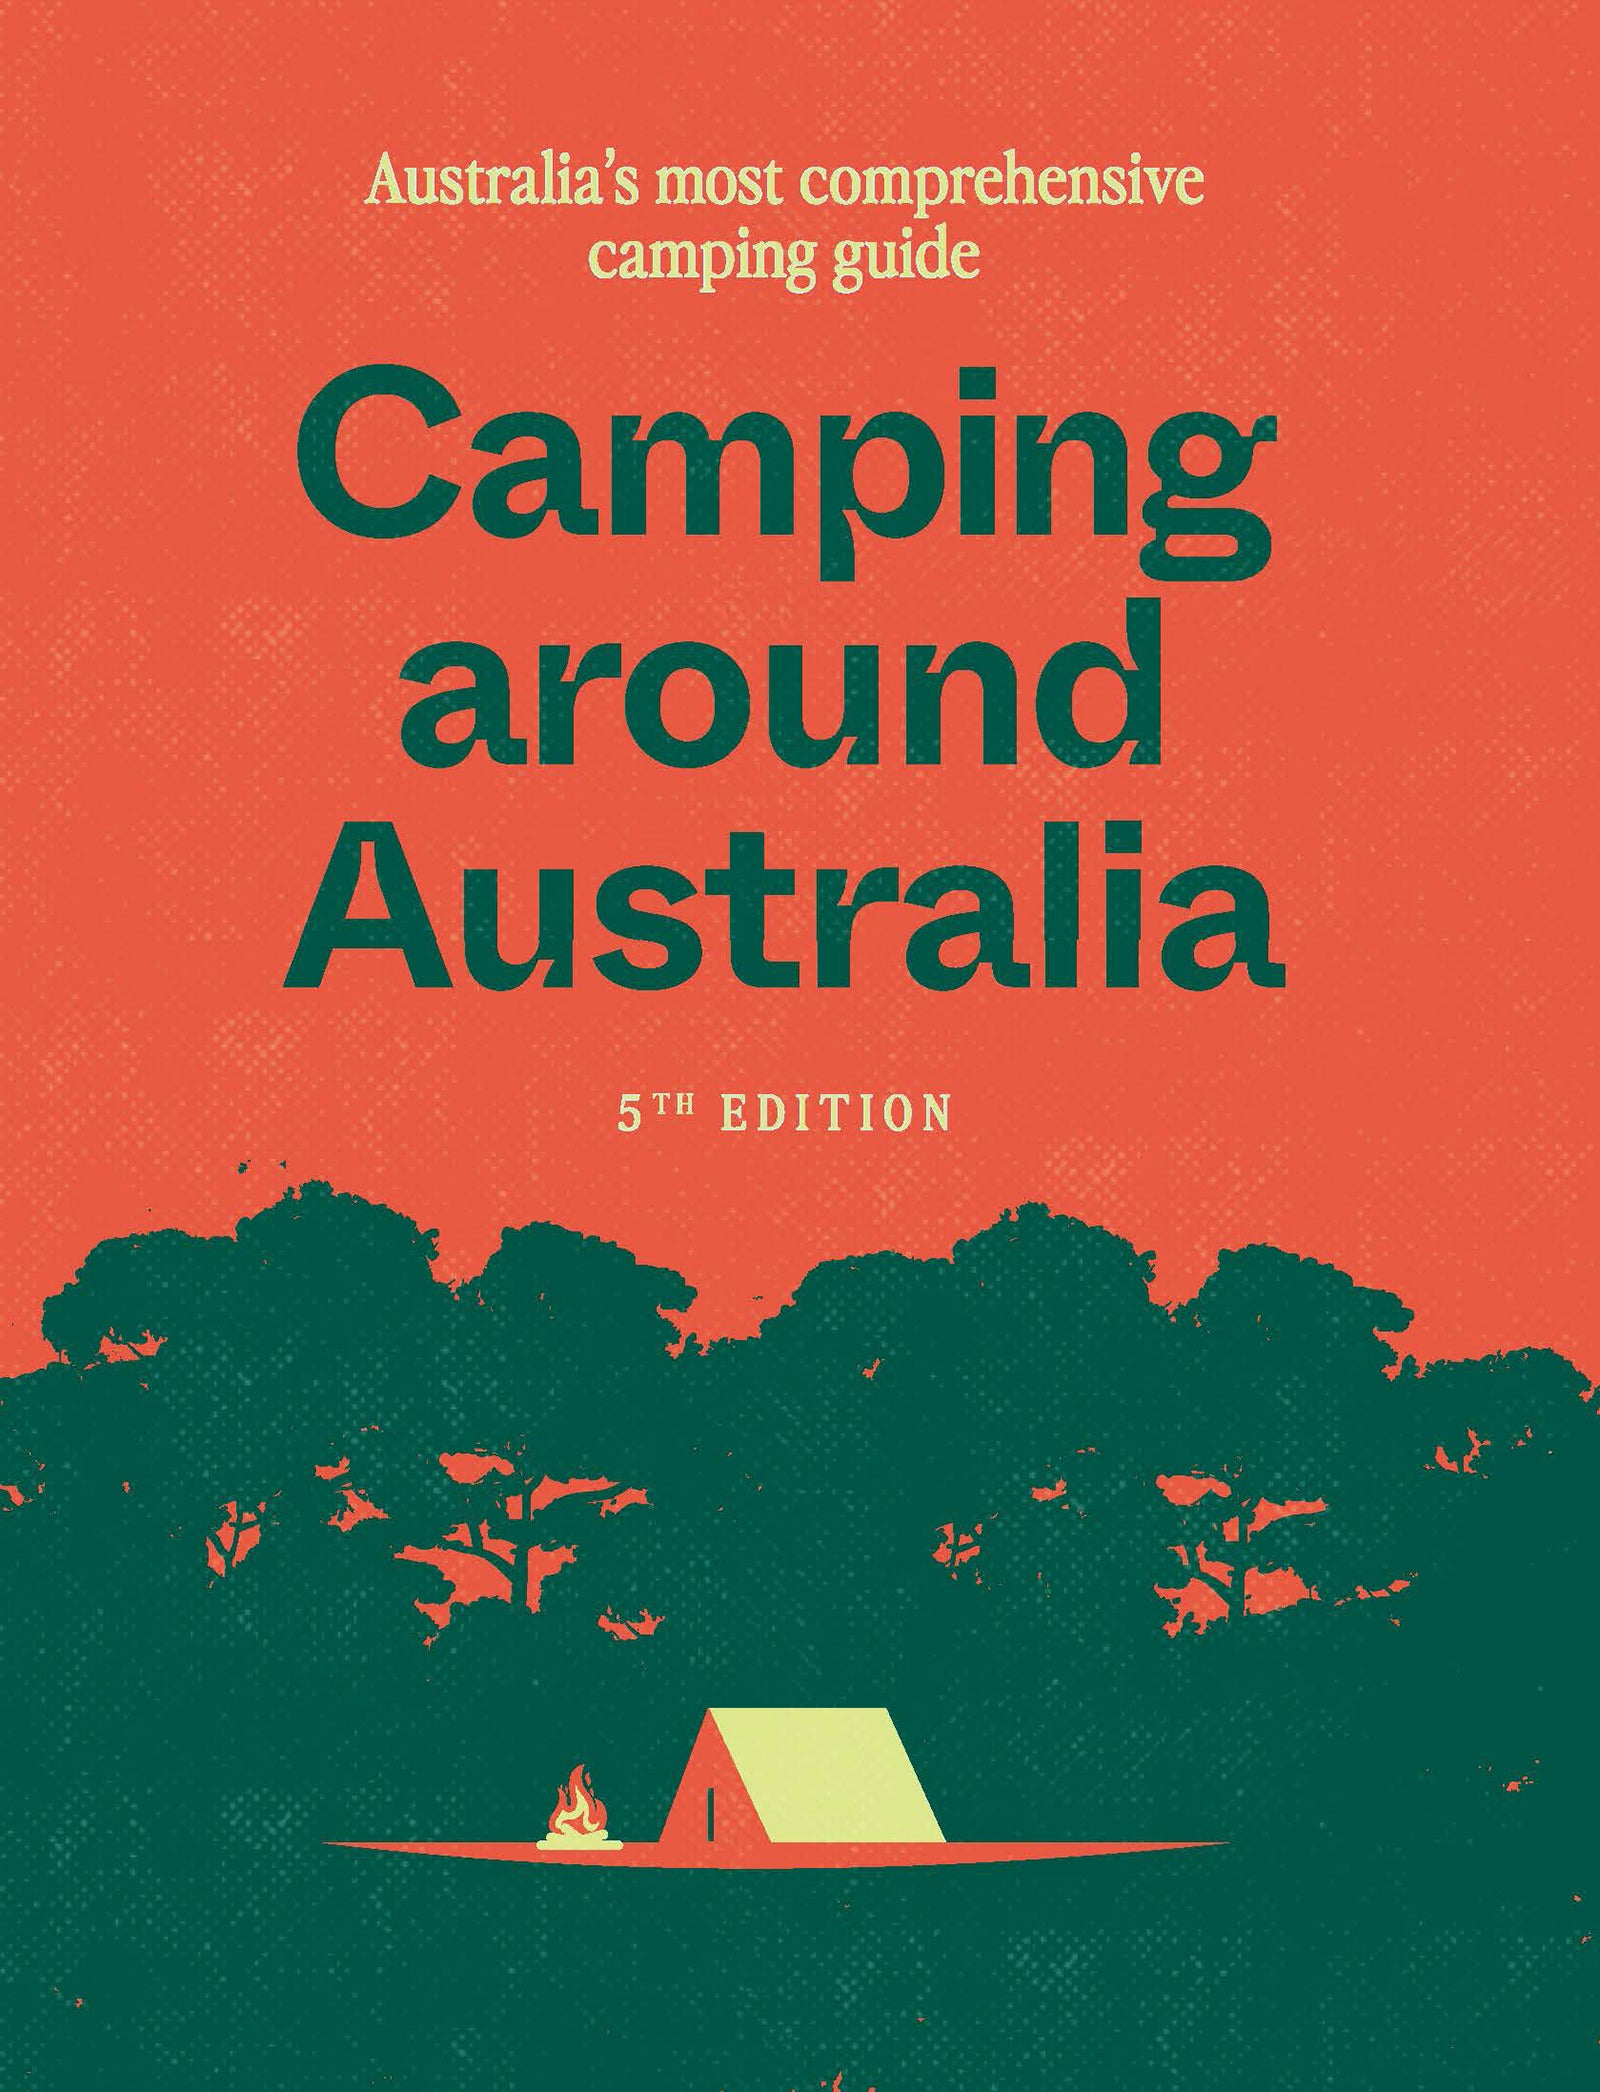 Camping around Australia book